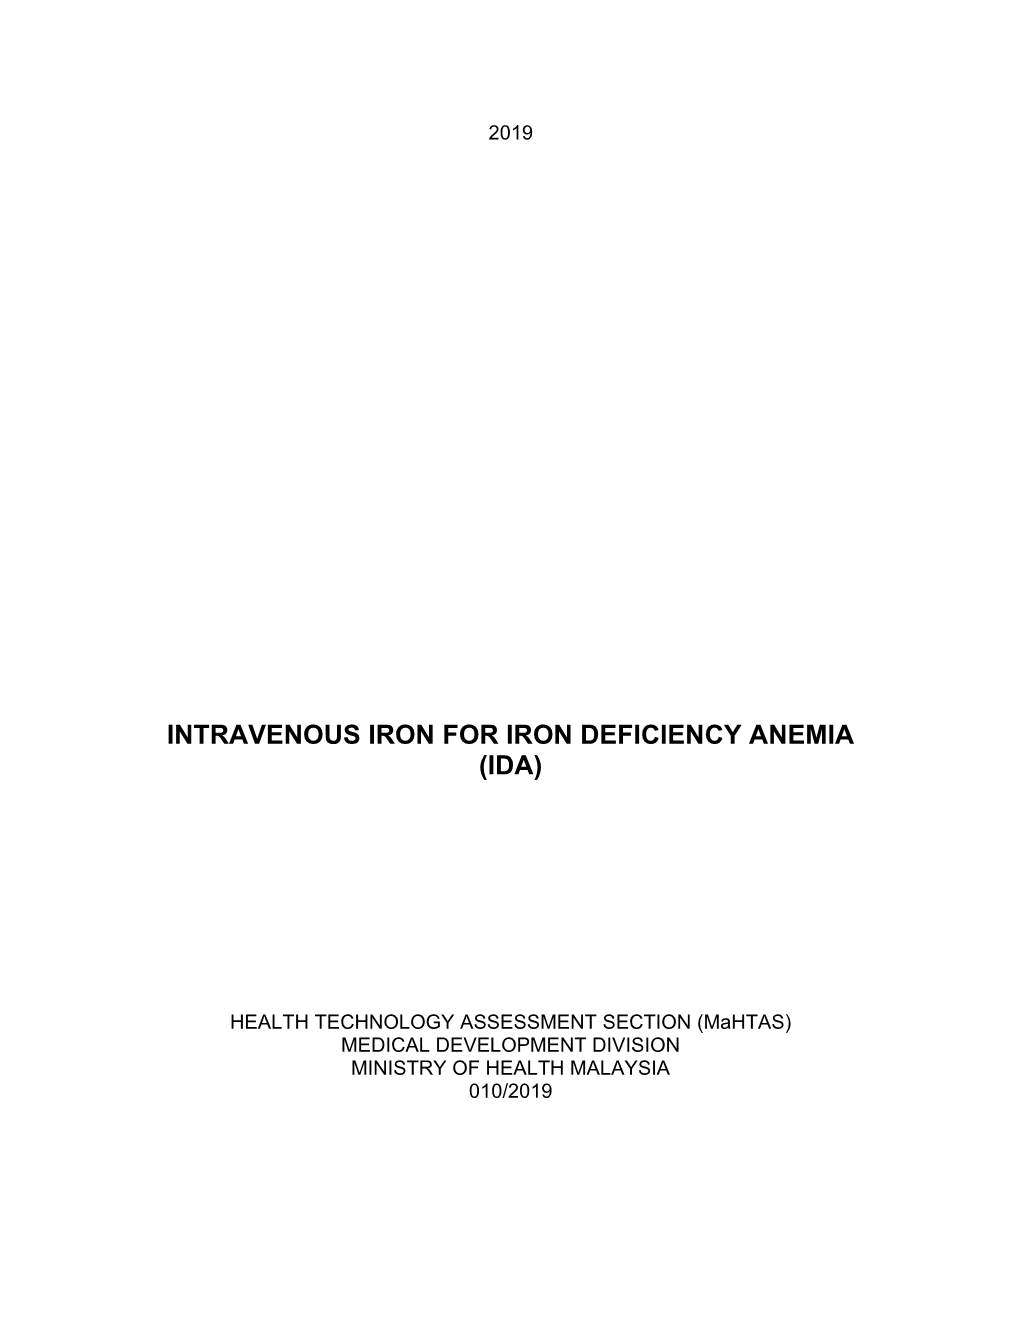 Intravenous Iron for Iron Deficiency Anemia (Ida)